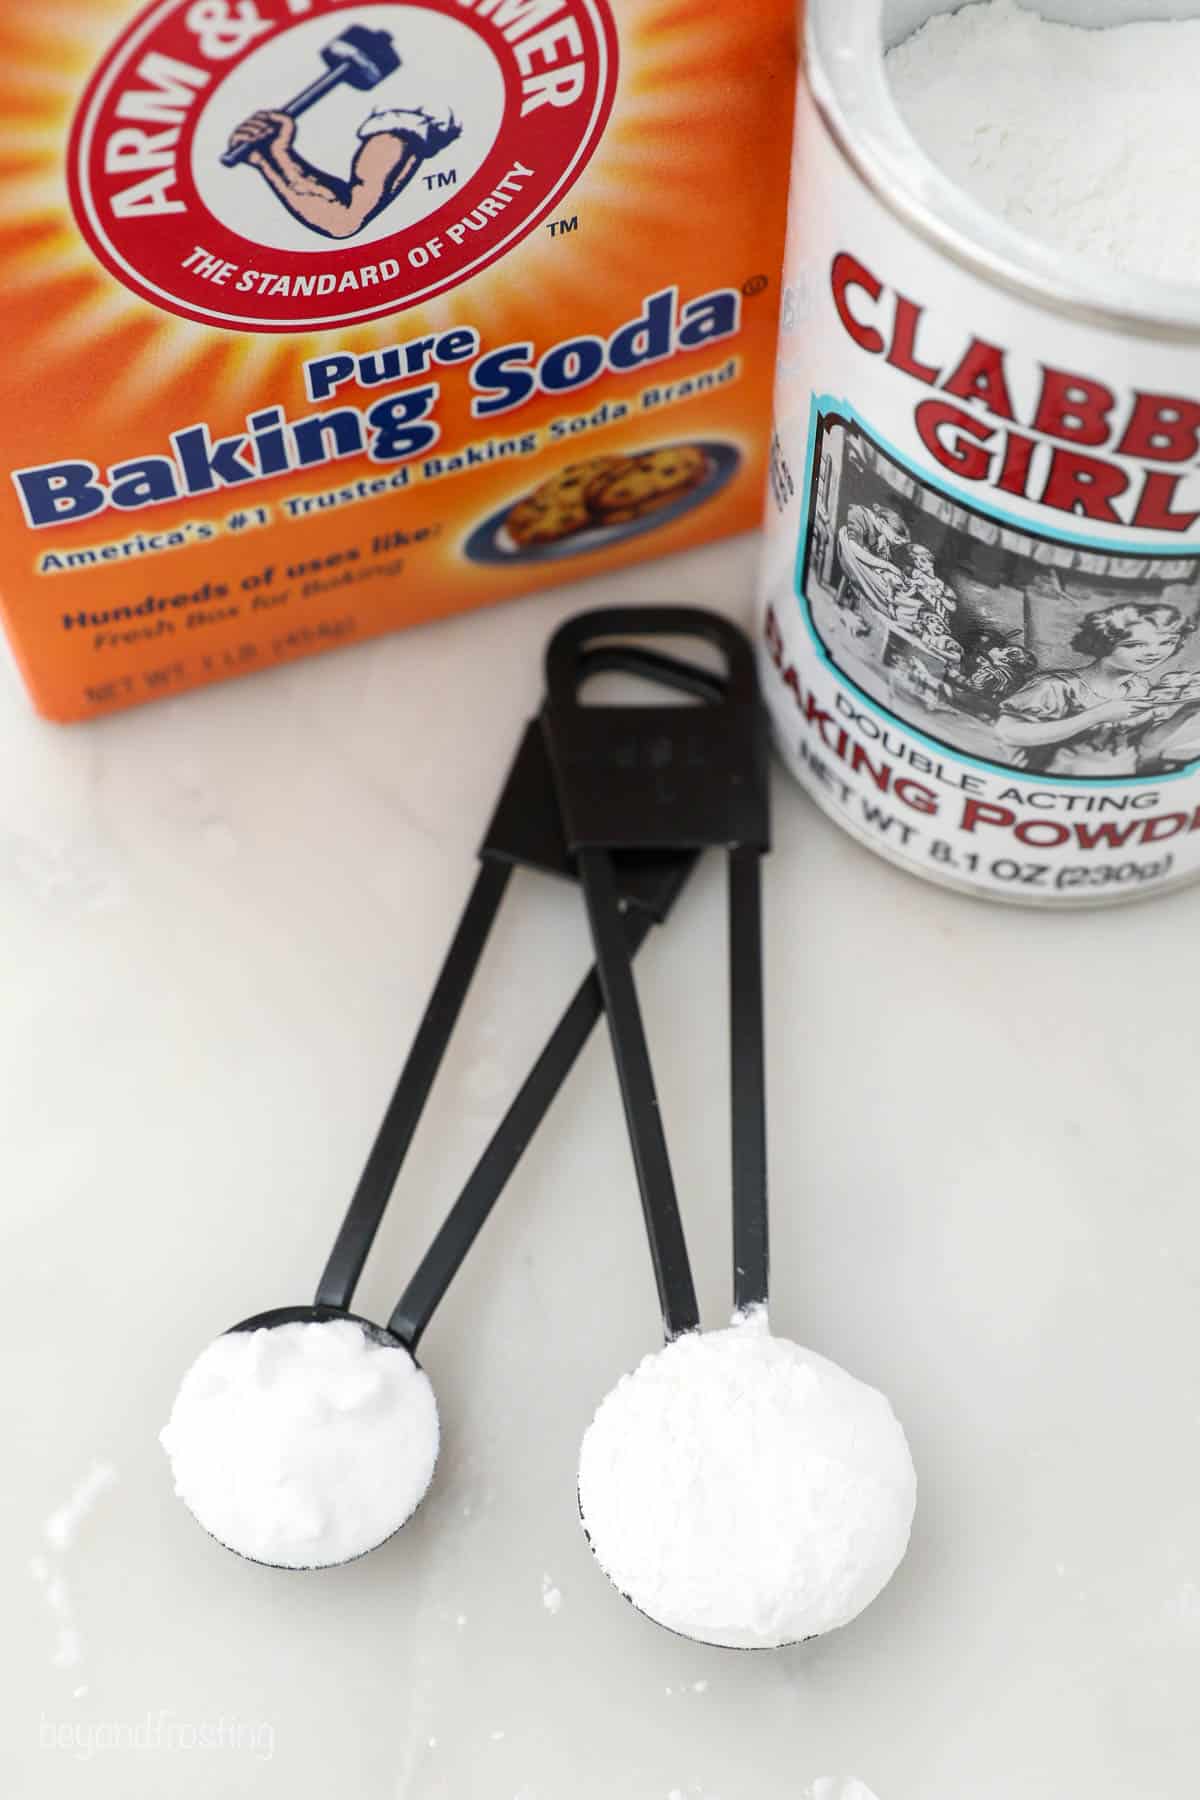 Baking soda in a measuring spoon beside baking powder in a larger measuring spoon on a countertop